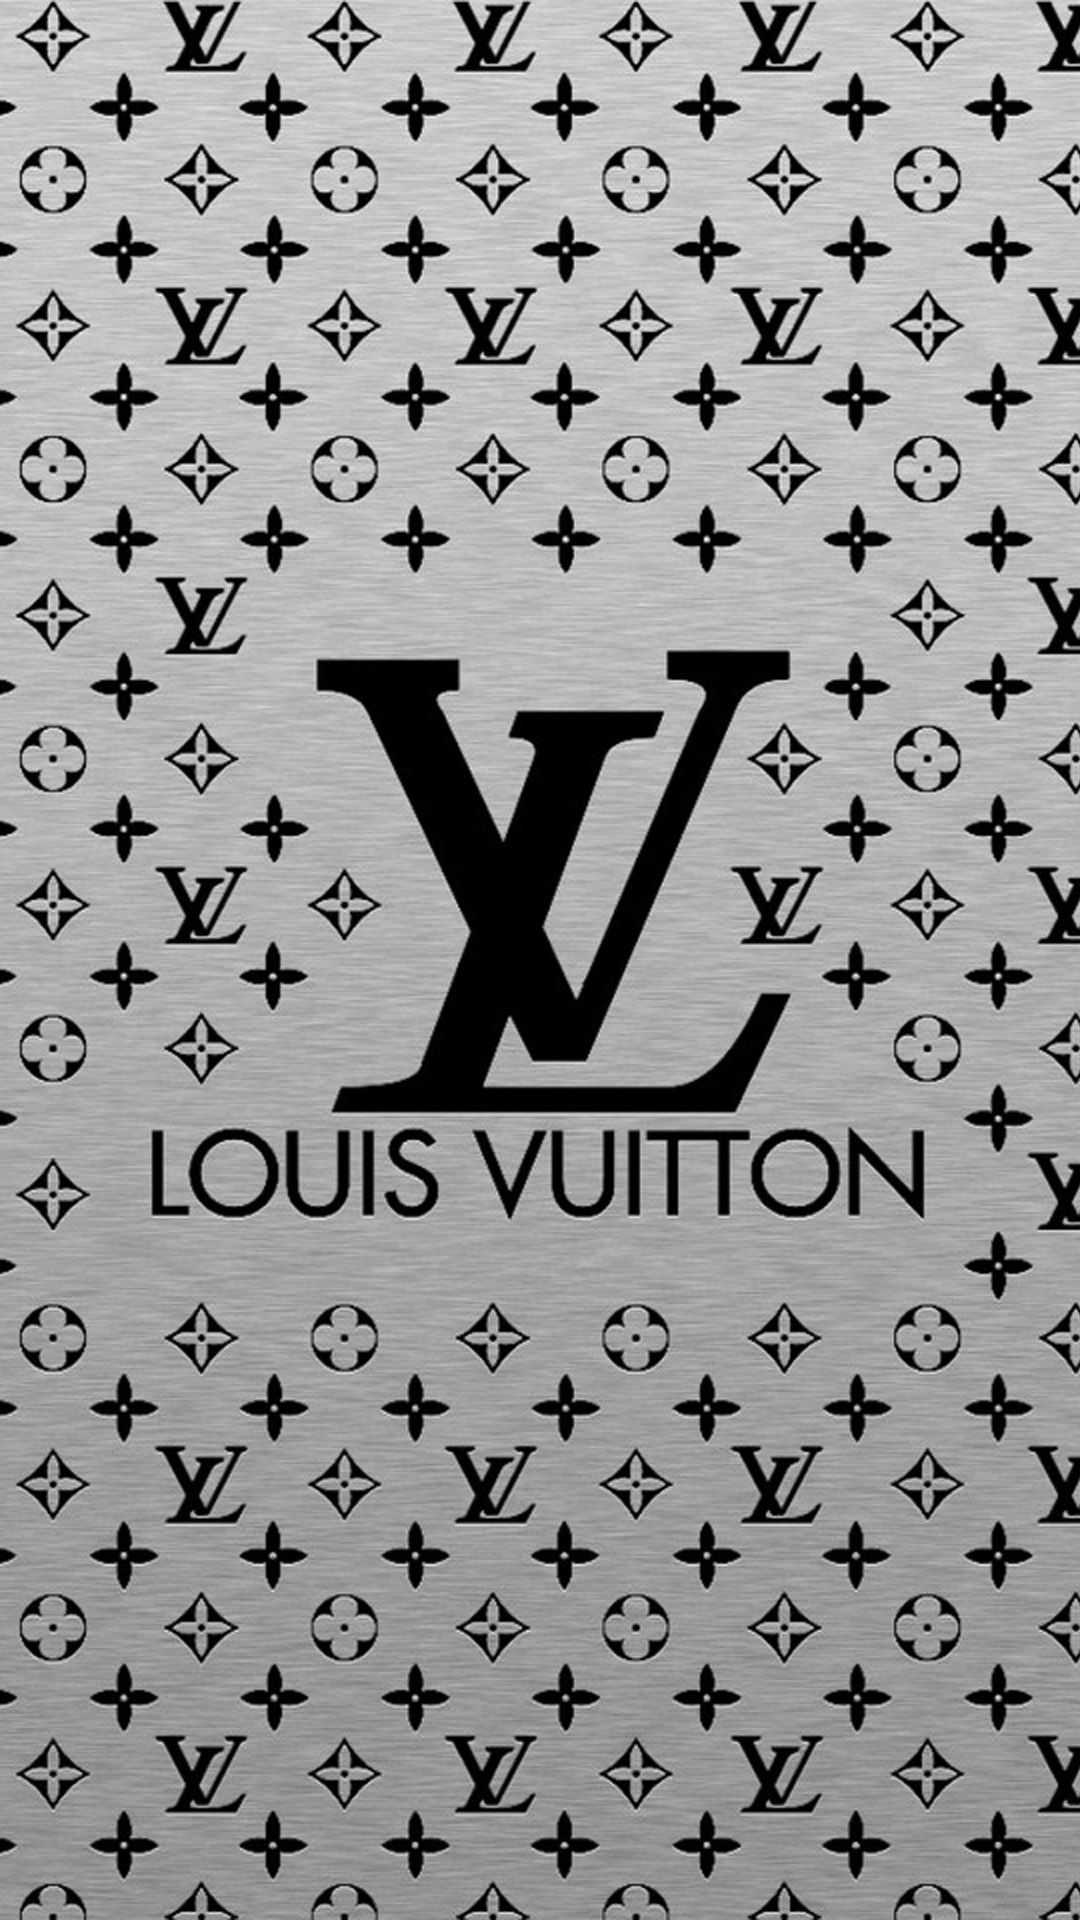 Louis Vuitton Wallpaper for iPhone  Louis vuitton background, Louis vuitton  iphone wallpaper, Gucci wallpaper iphone